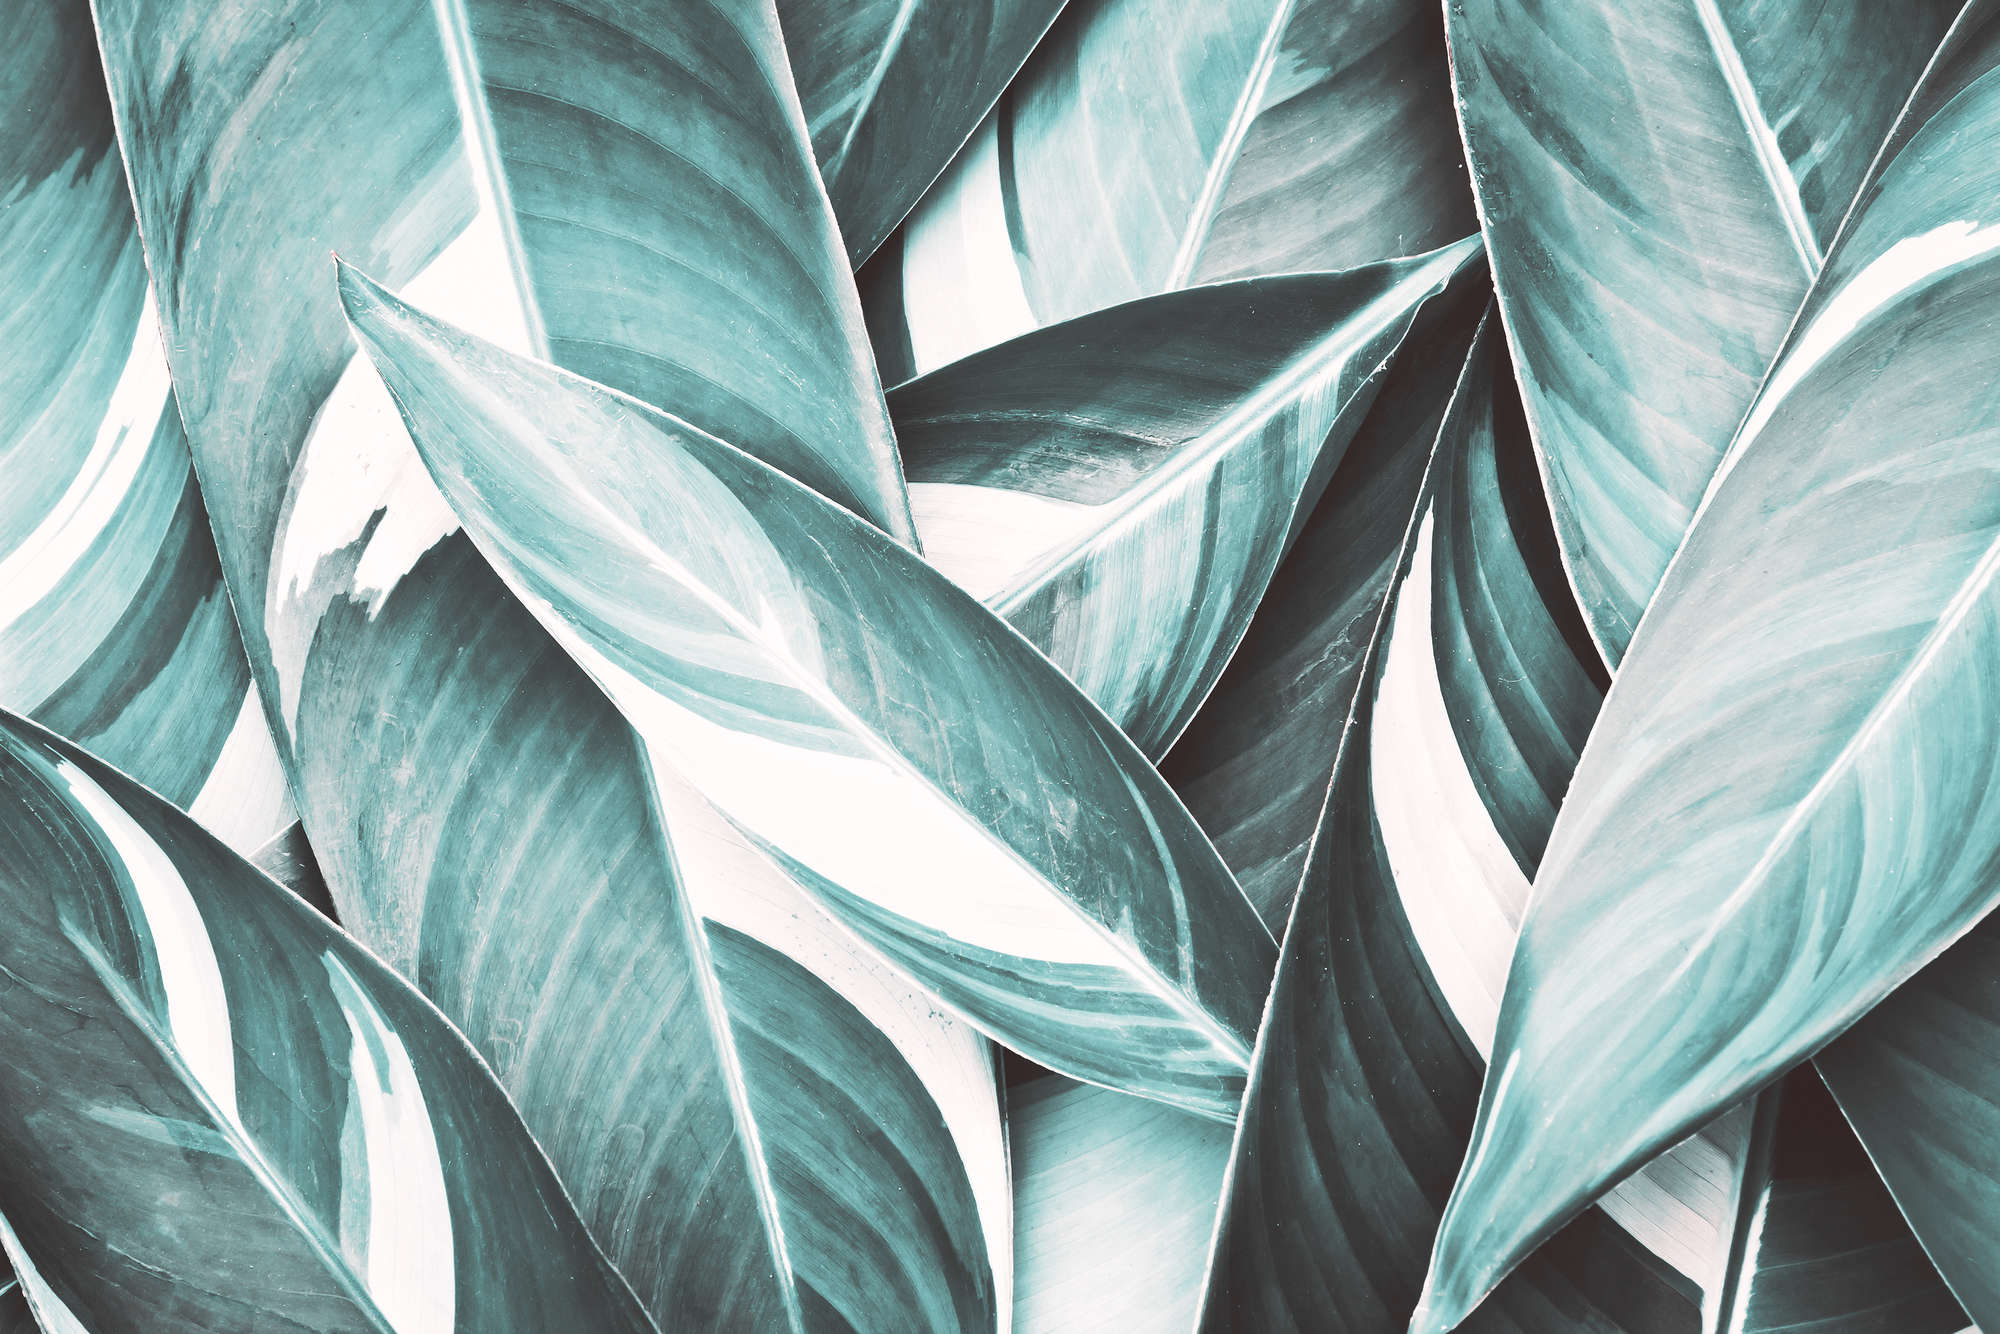             Natur Fototapete Palmenblätter Motiv grau auf Perlmutt Glattvlies
        